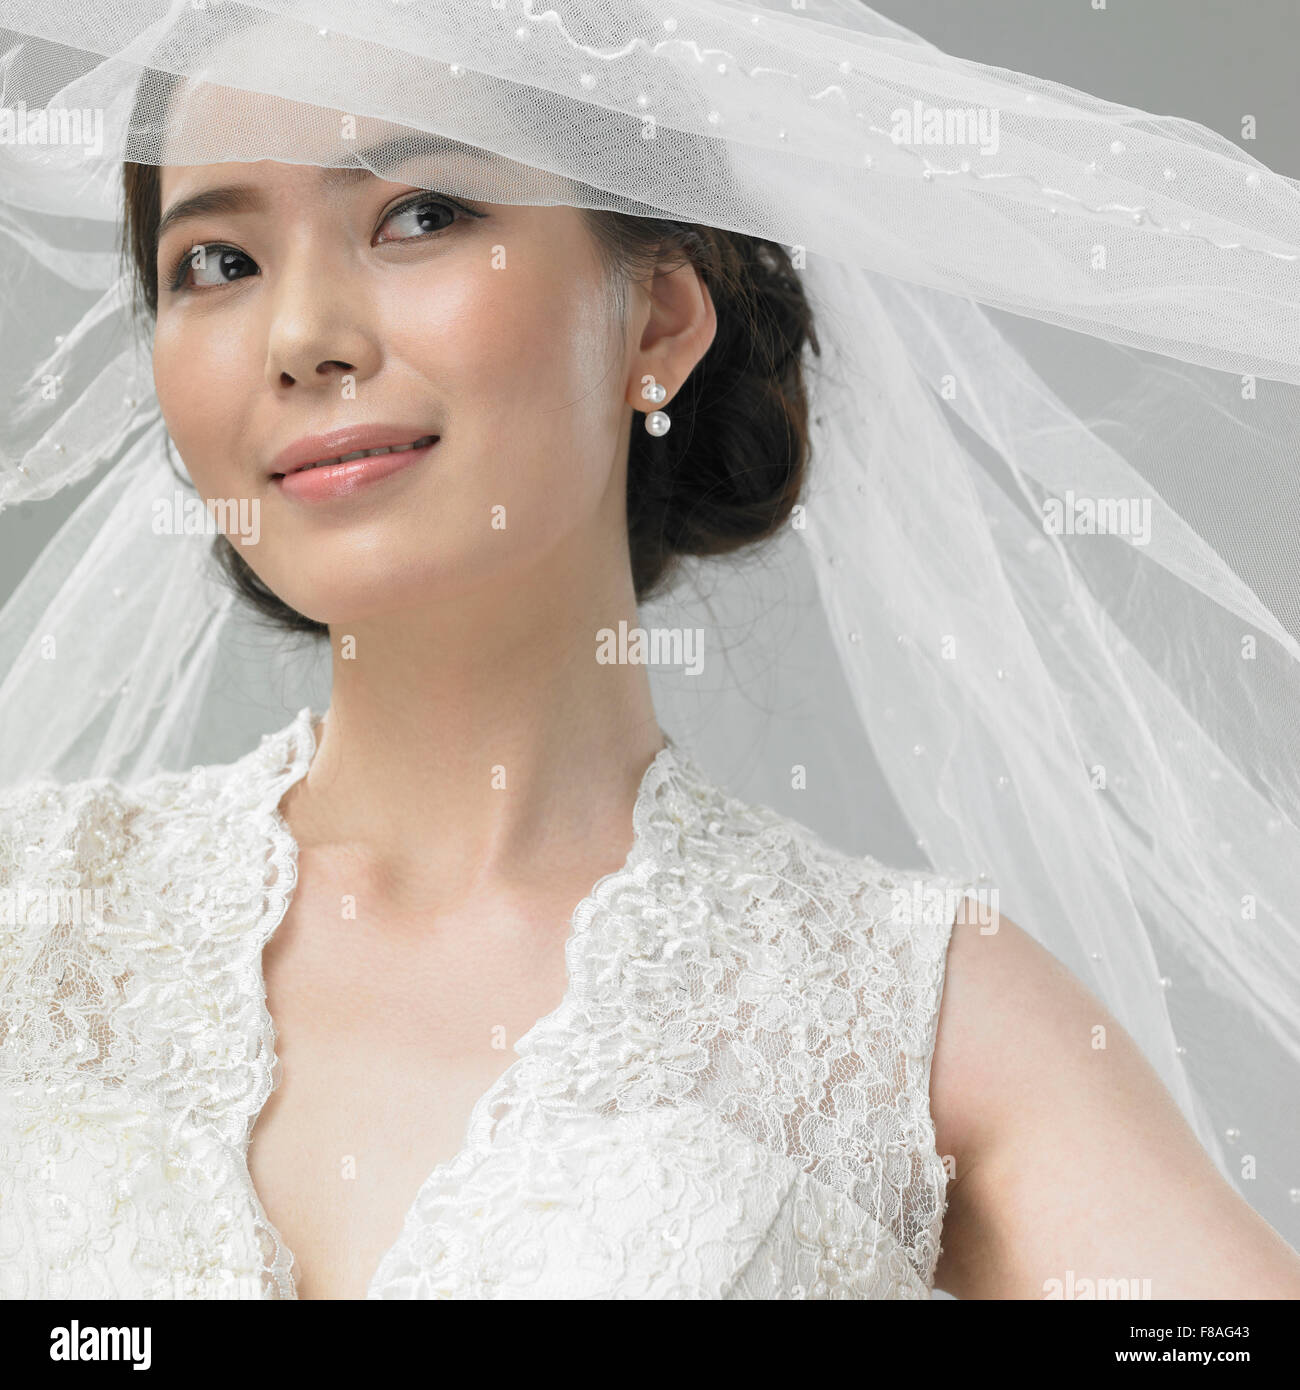 Woman in wedding dress with wedding veil open Stock Photo